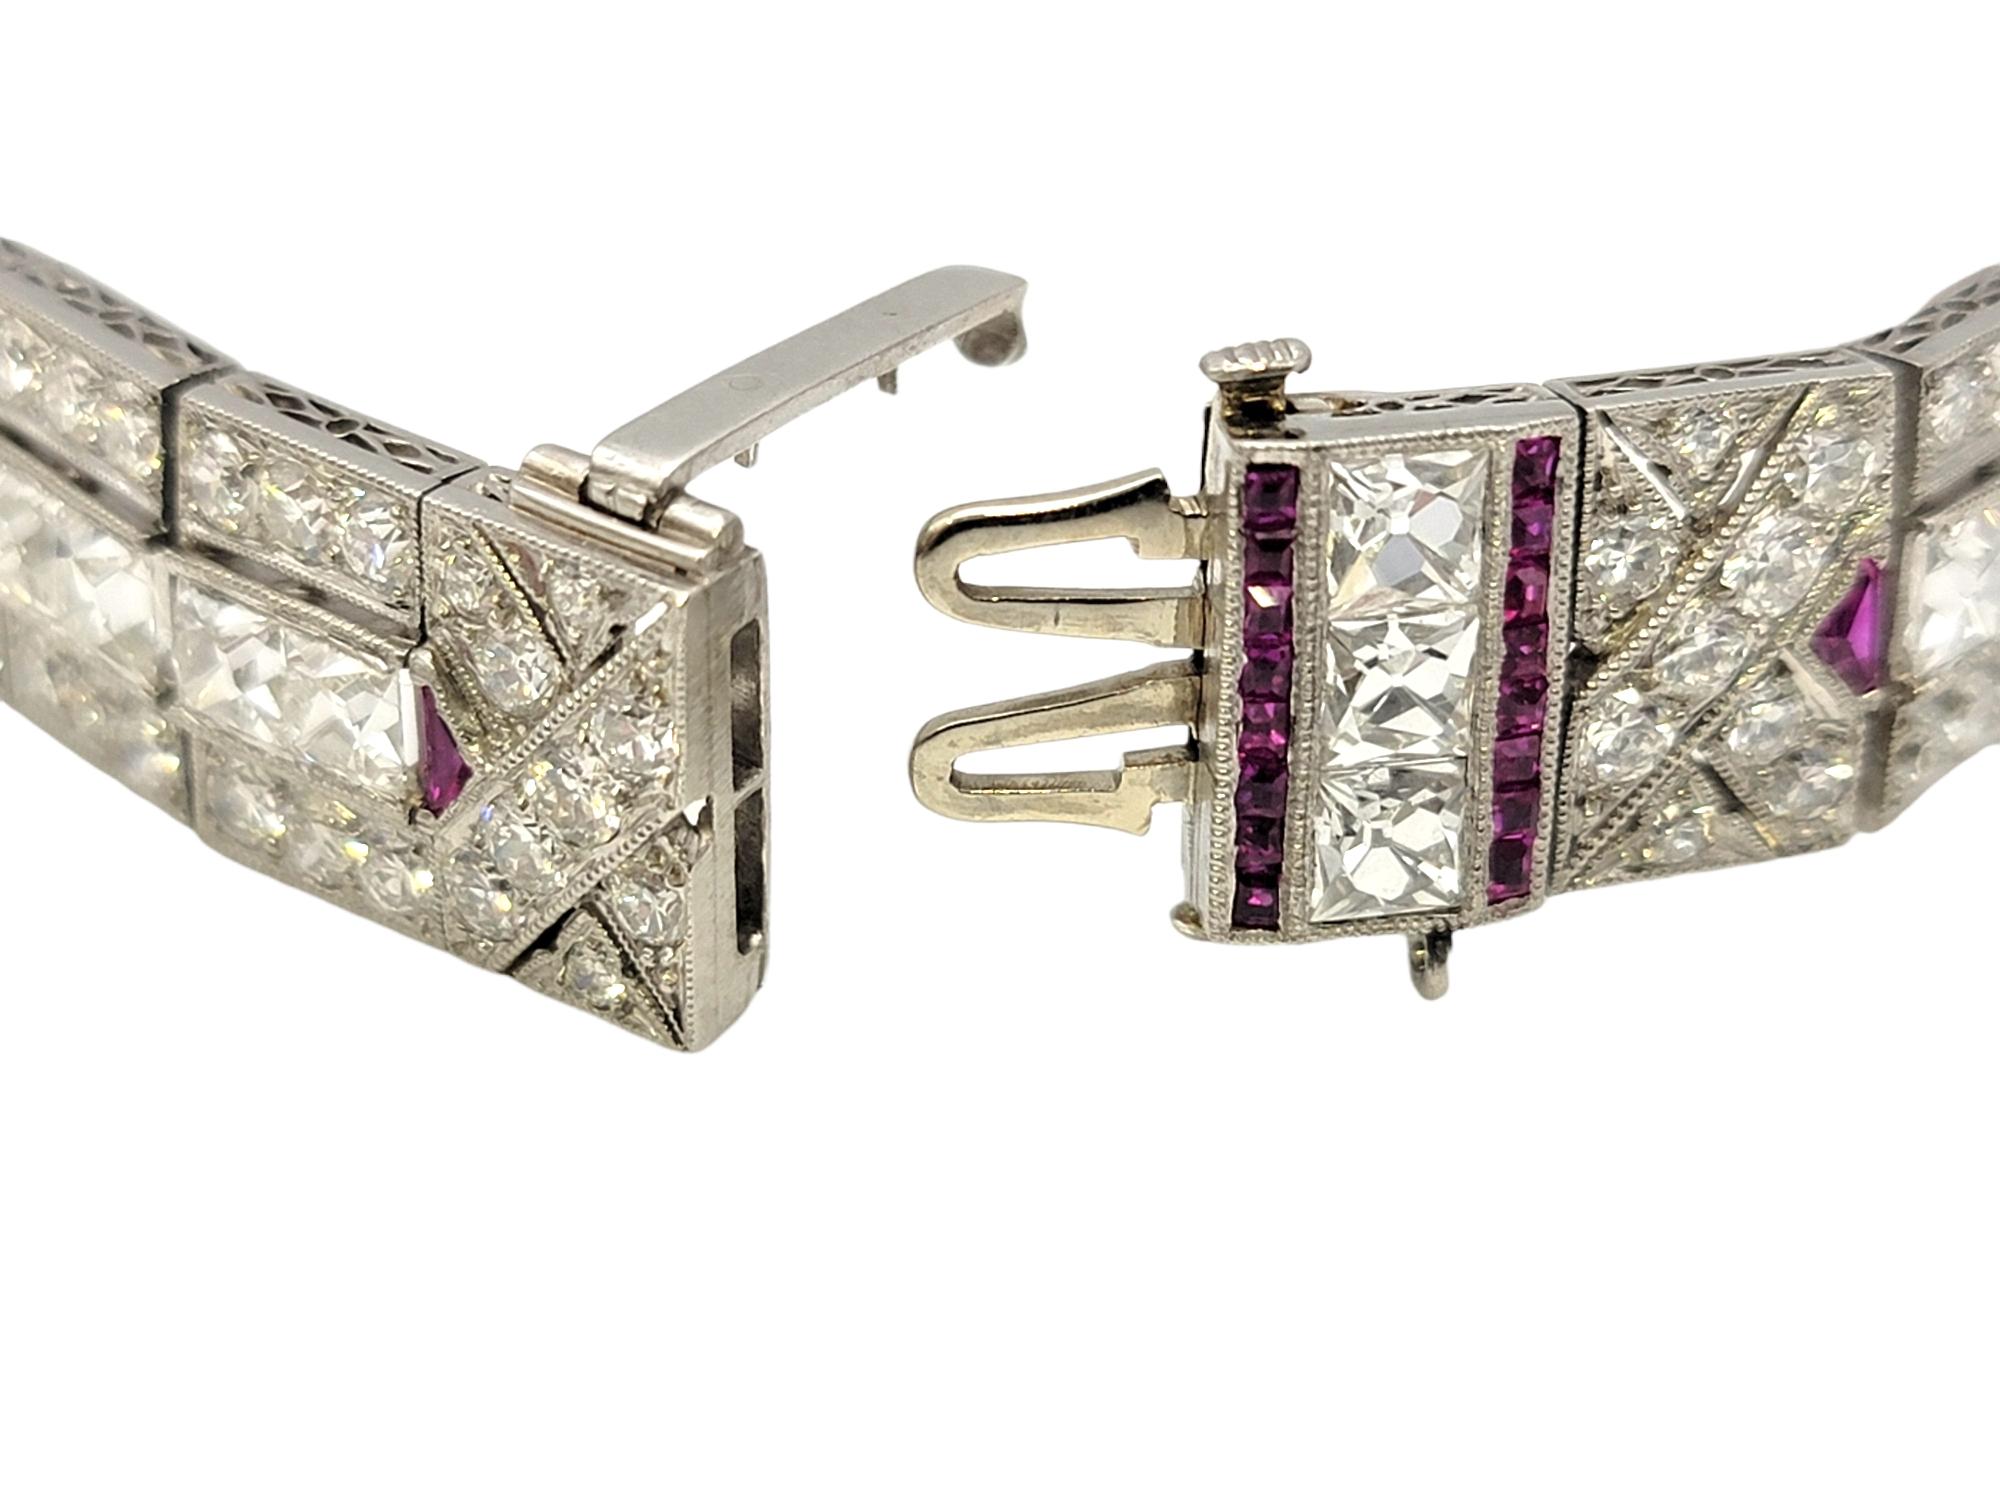 French Cut Vintage Art Deco Diamond and Ruby Bracelet 14.64 Carat Total Geometric Design For Sale